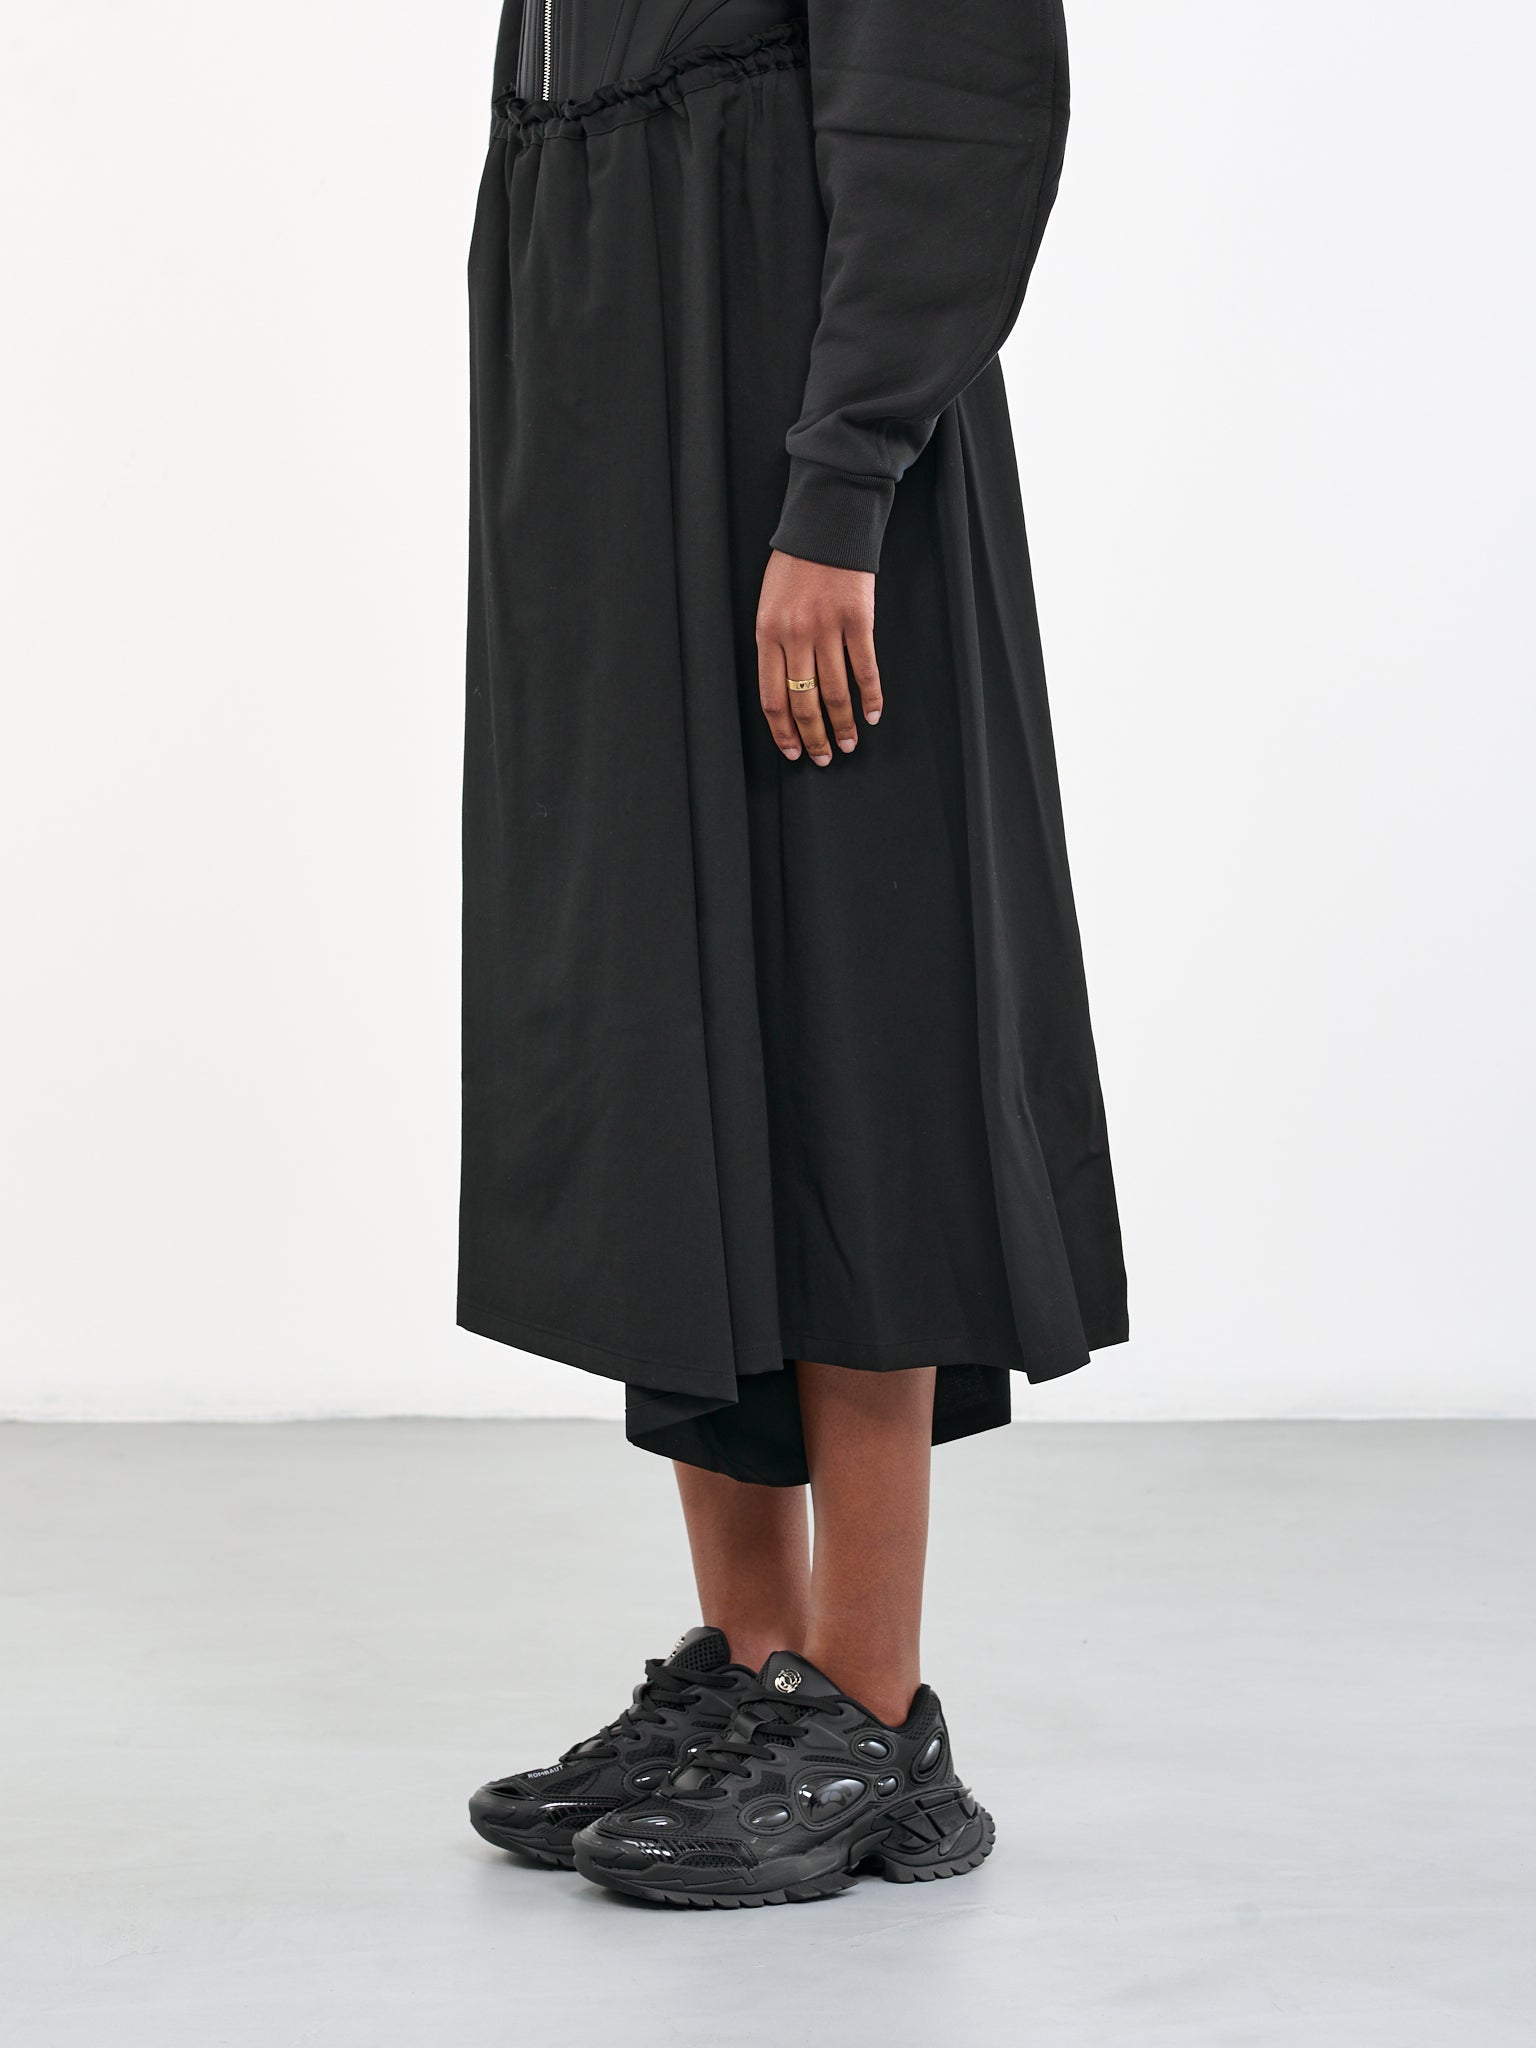 Draped Skirt (YU-P02-100-1-BLACK)